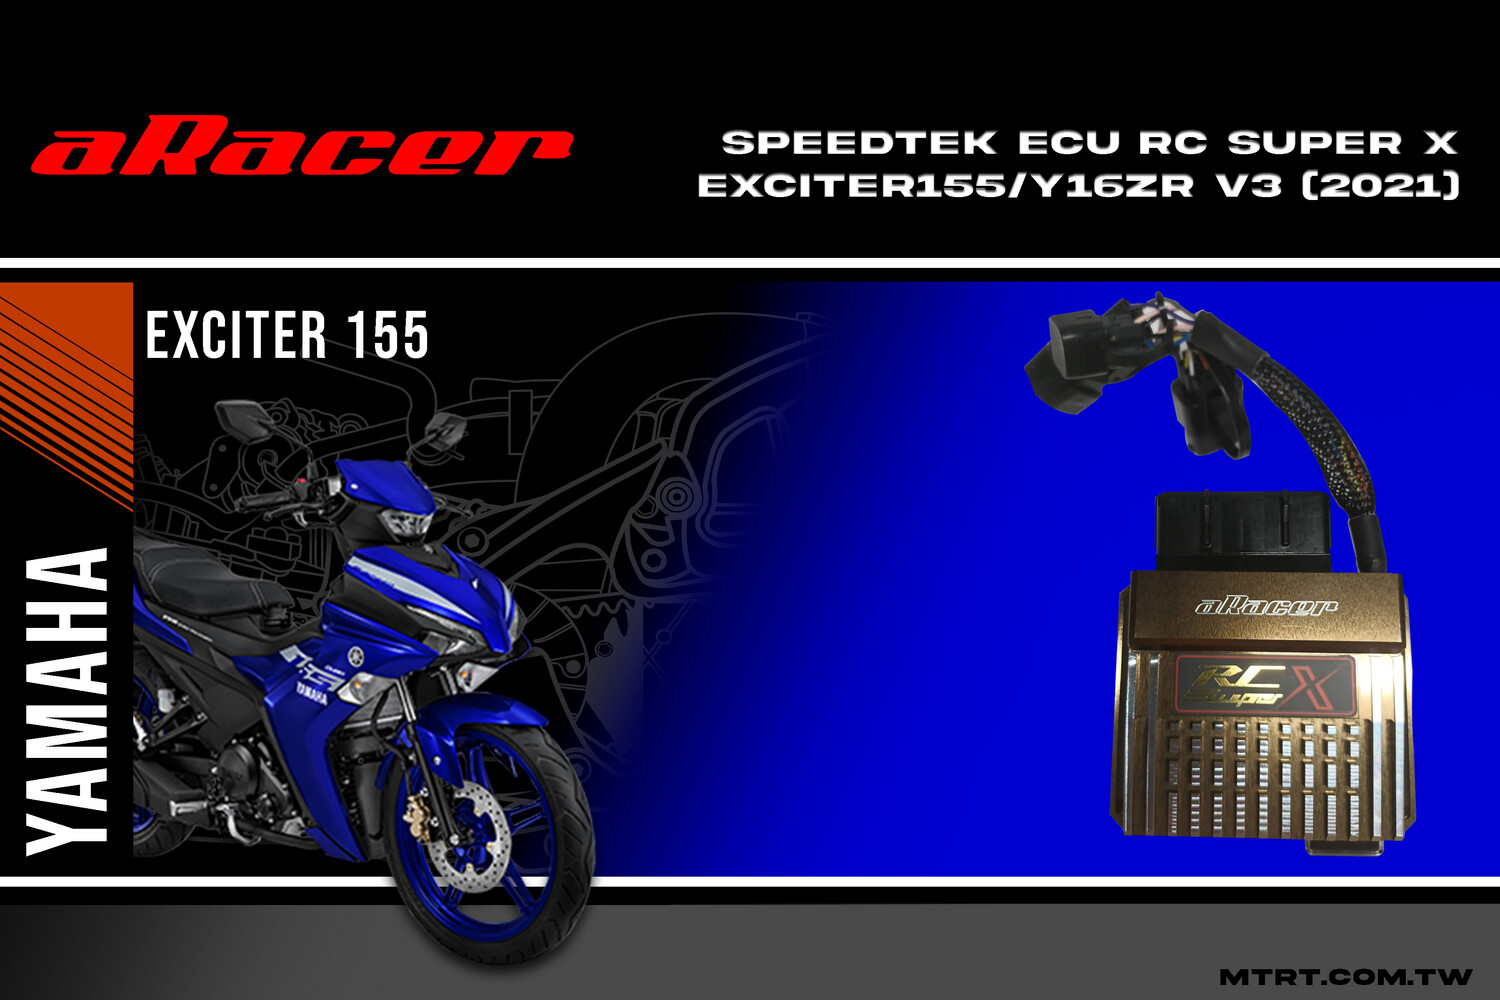 SpeedTEK ECU RC SUPER X EXCITER155/Y16ZR V3 (2021)